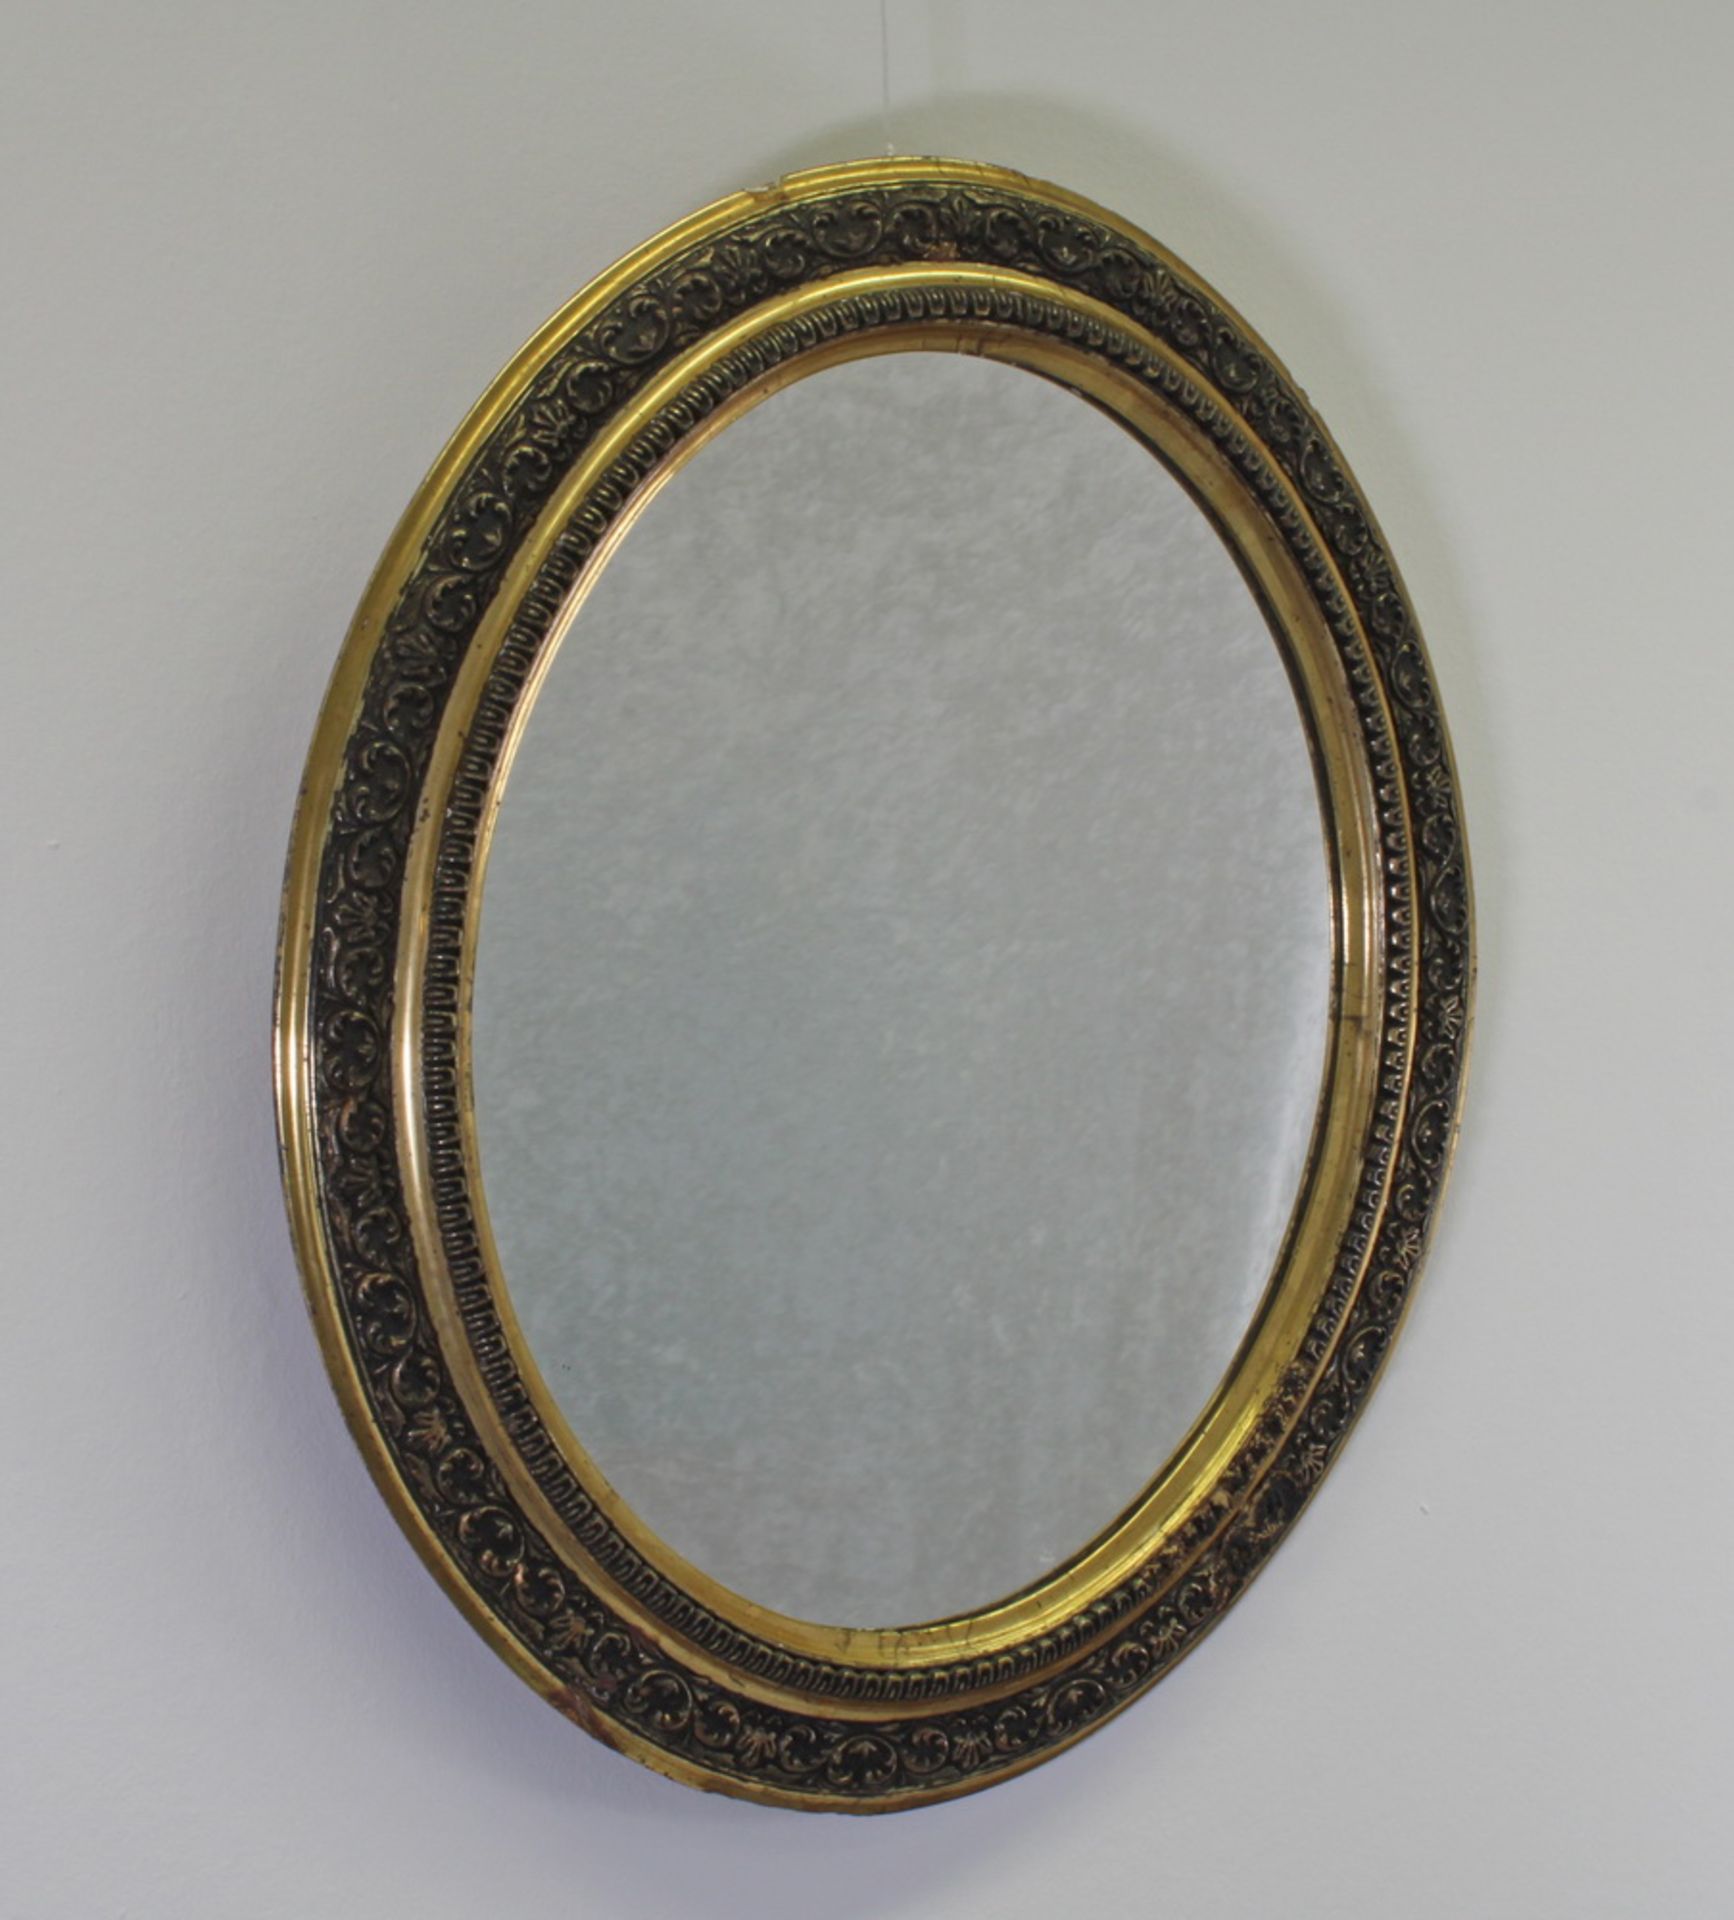 Spiegel, Ende 19. Jh., ovale Form, Holz/Stuck, goldfarben, teils geschwärzt, Glas erneuert, 70 x 6